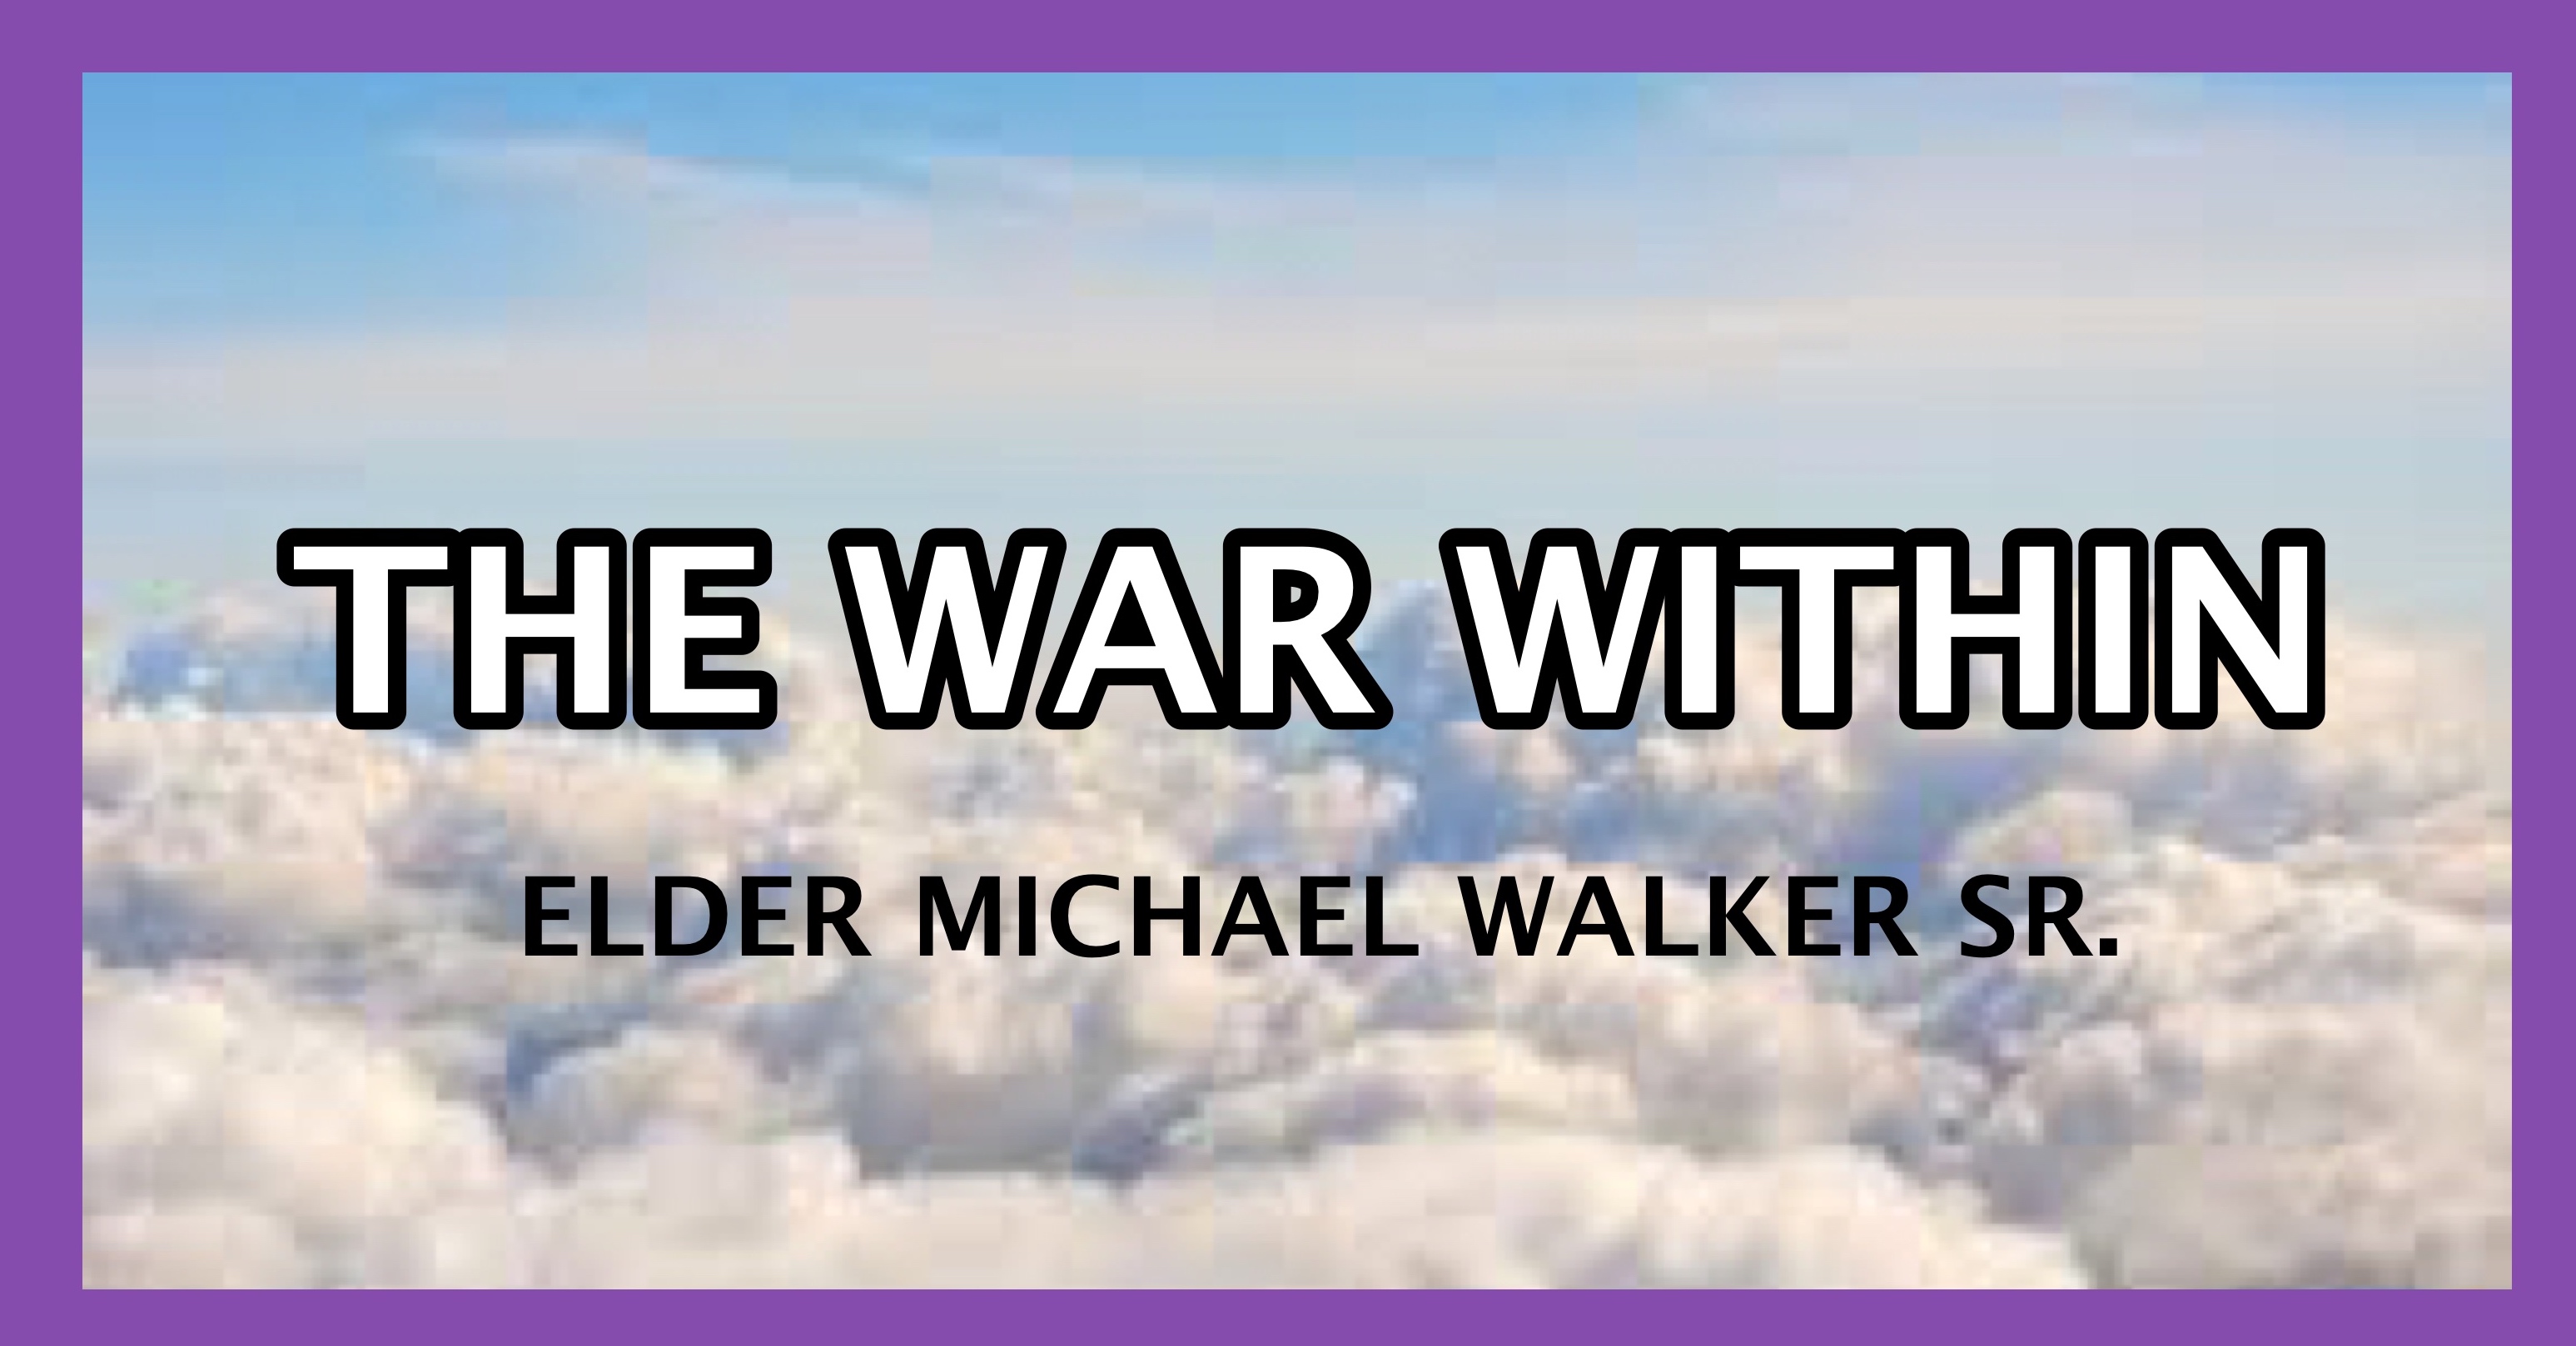 THE WAR WITHIN: ELDER MICHAEL WALKER SR